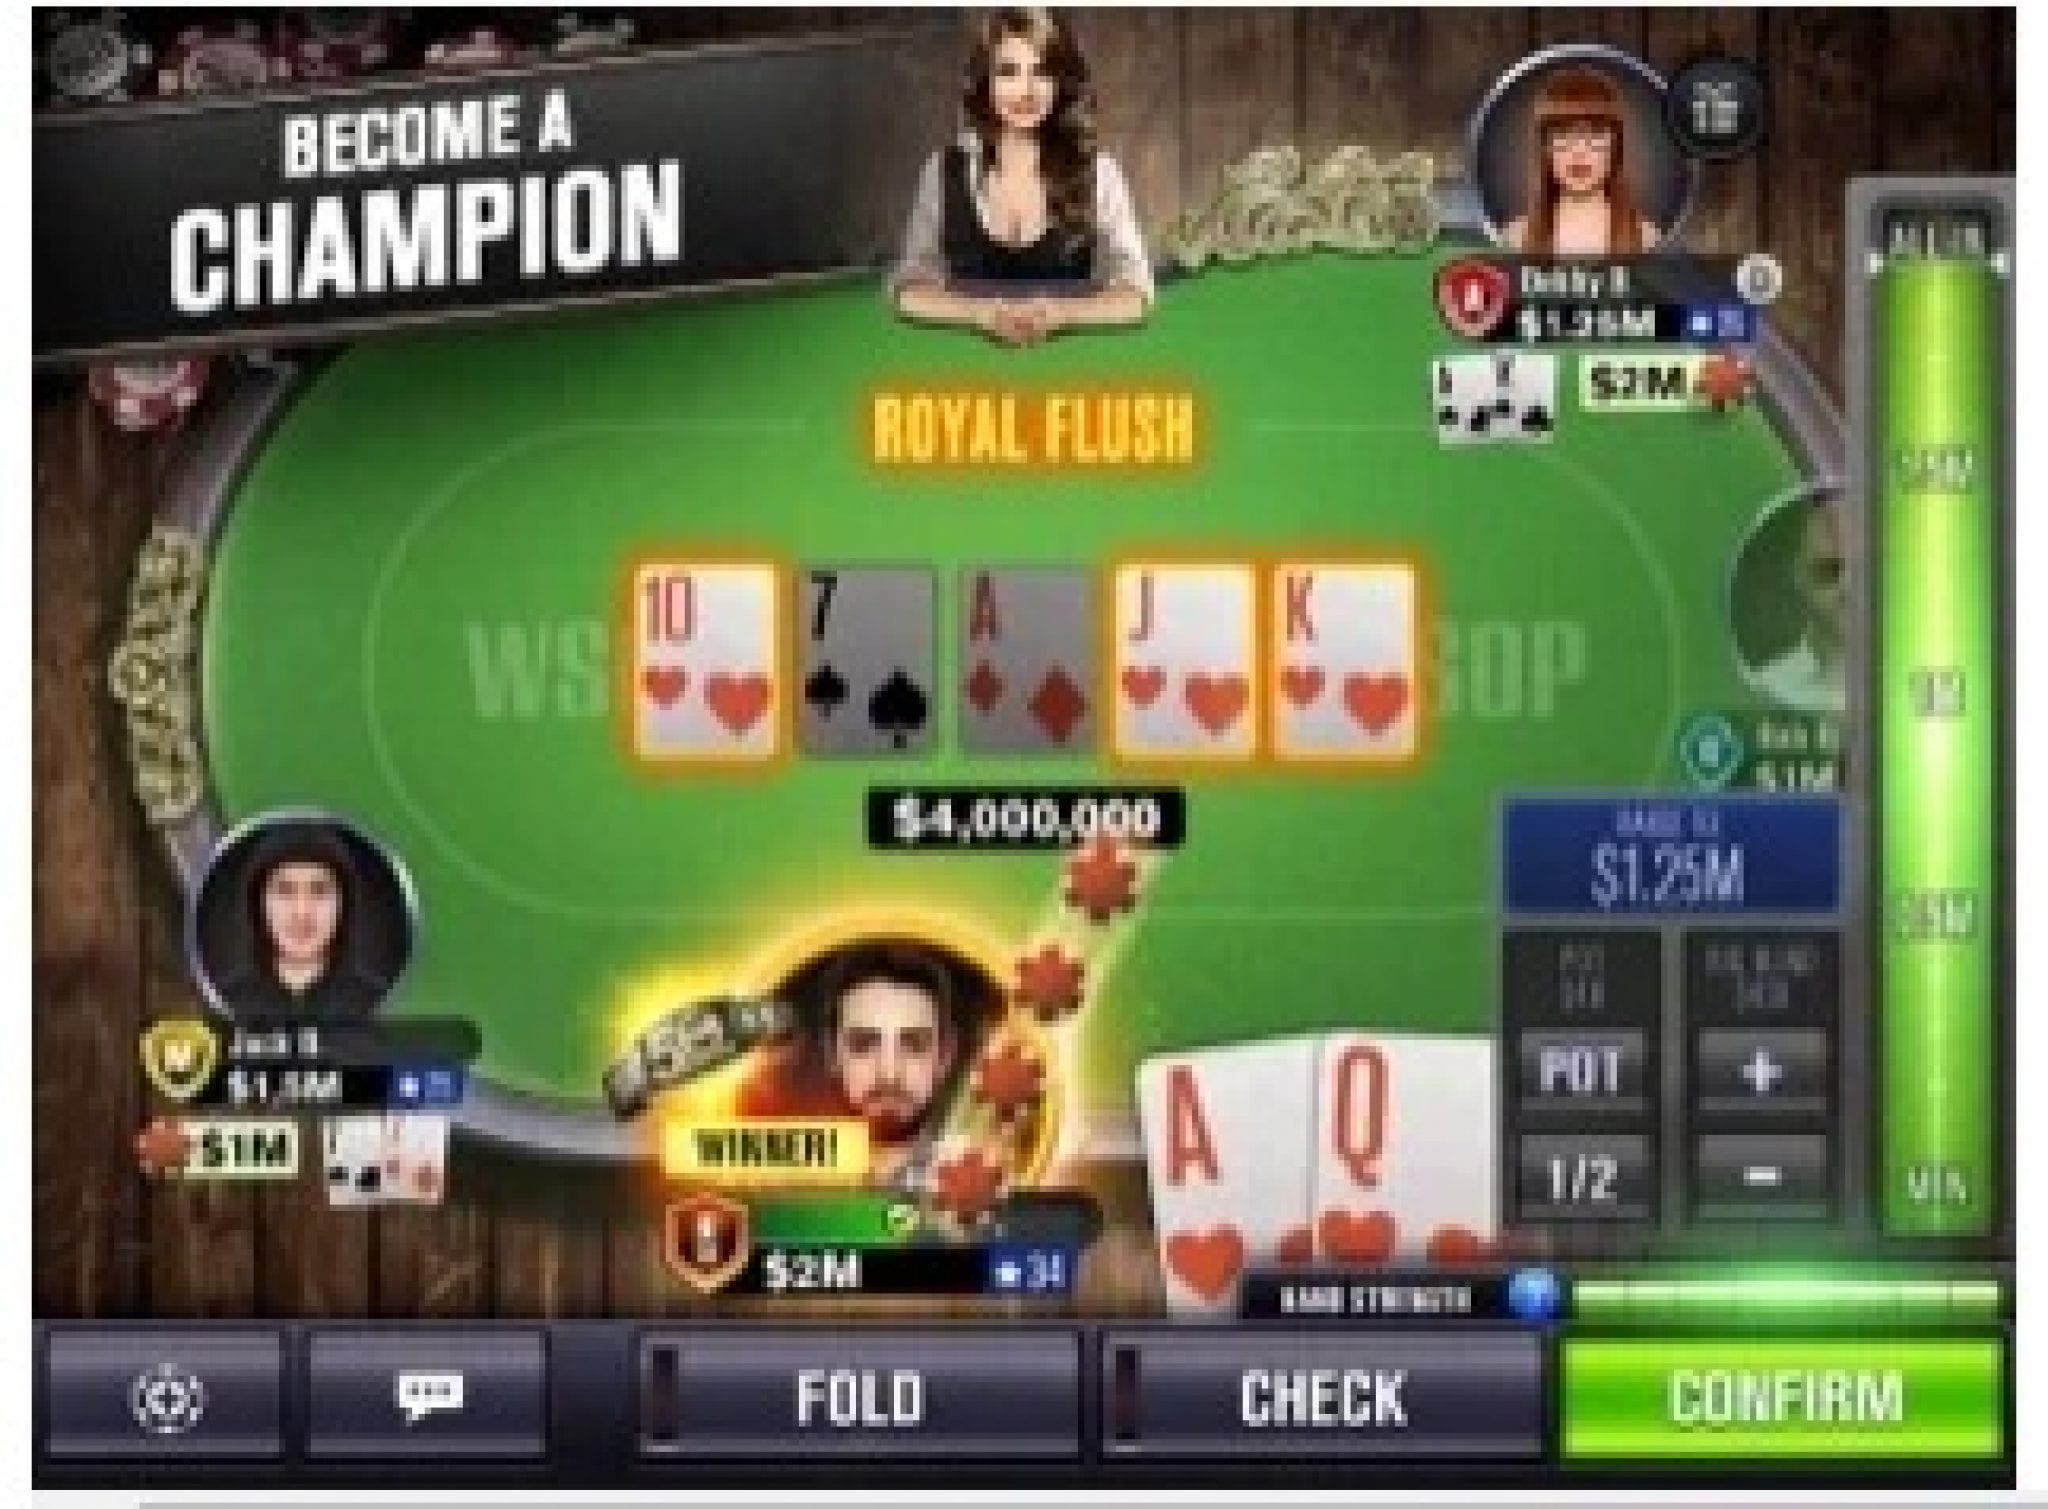 play free online games poker casino